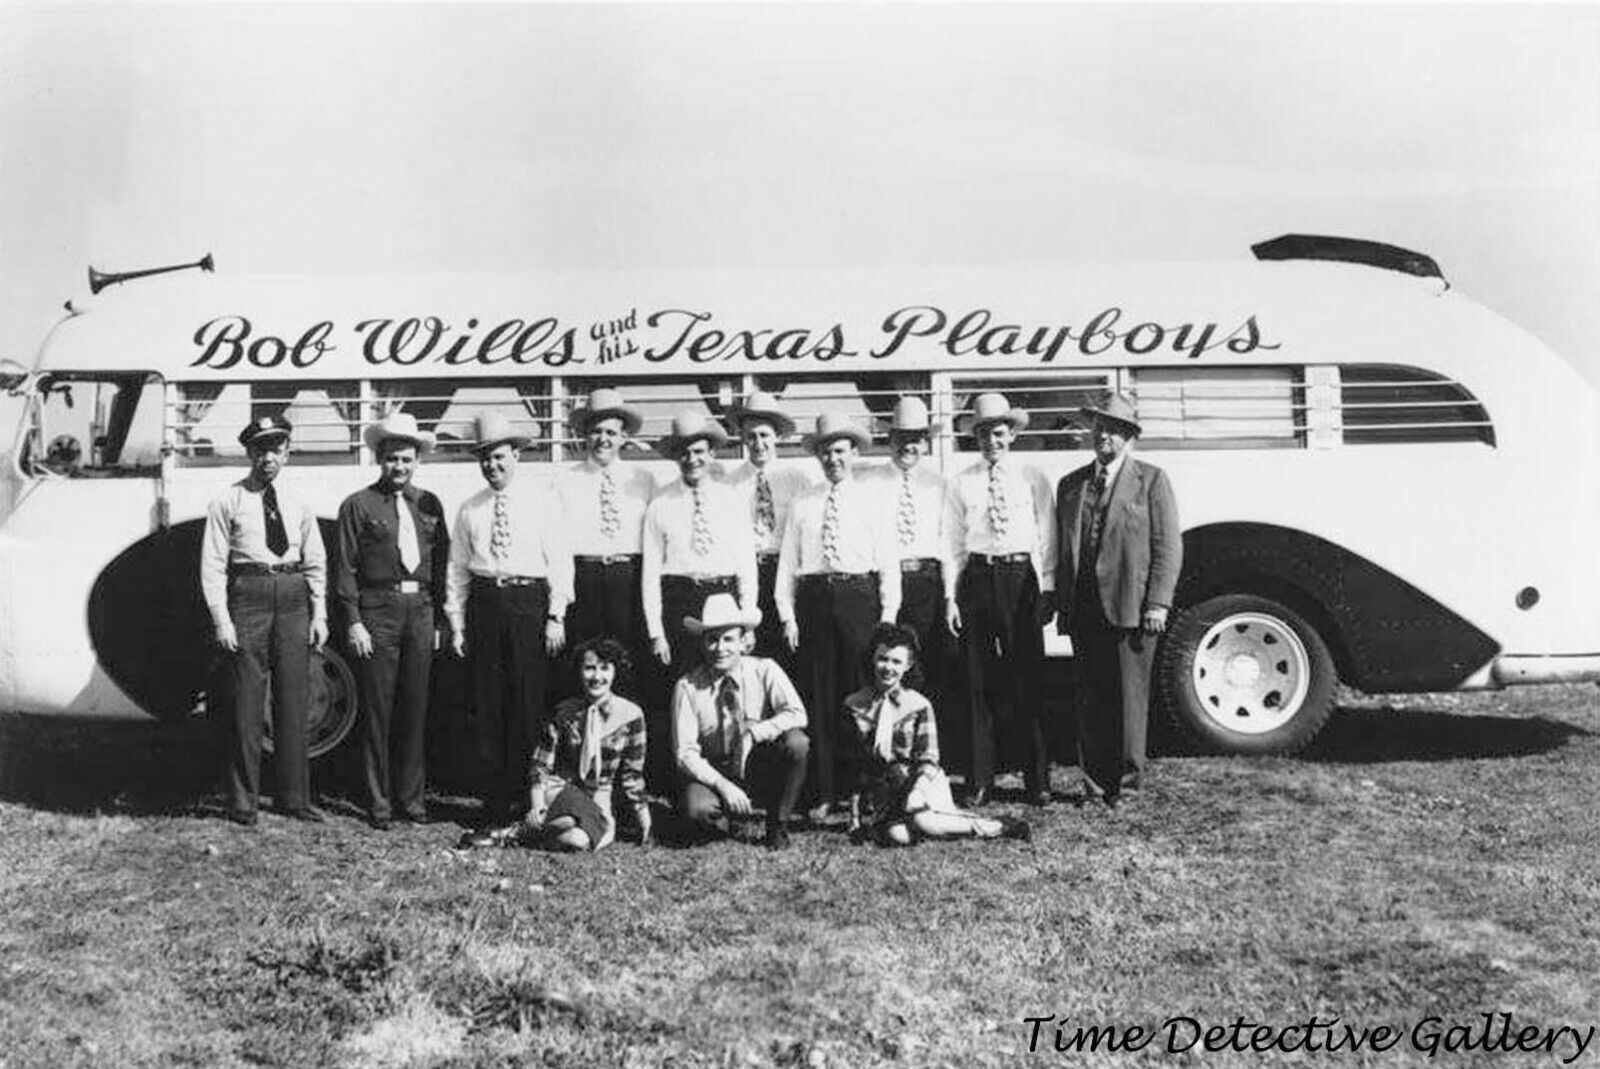 Bob Wills & The Texas Playboys with Tour Bus - Vintage Celebrity Print